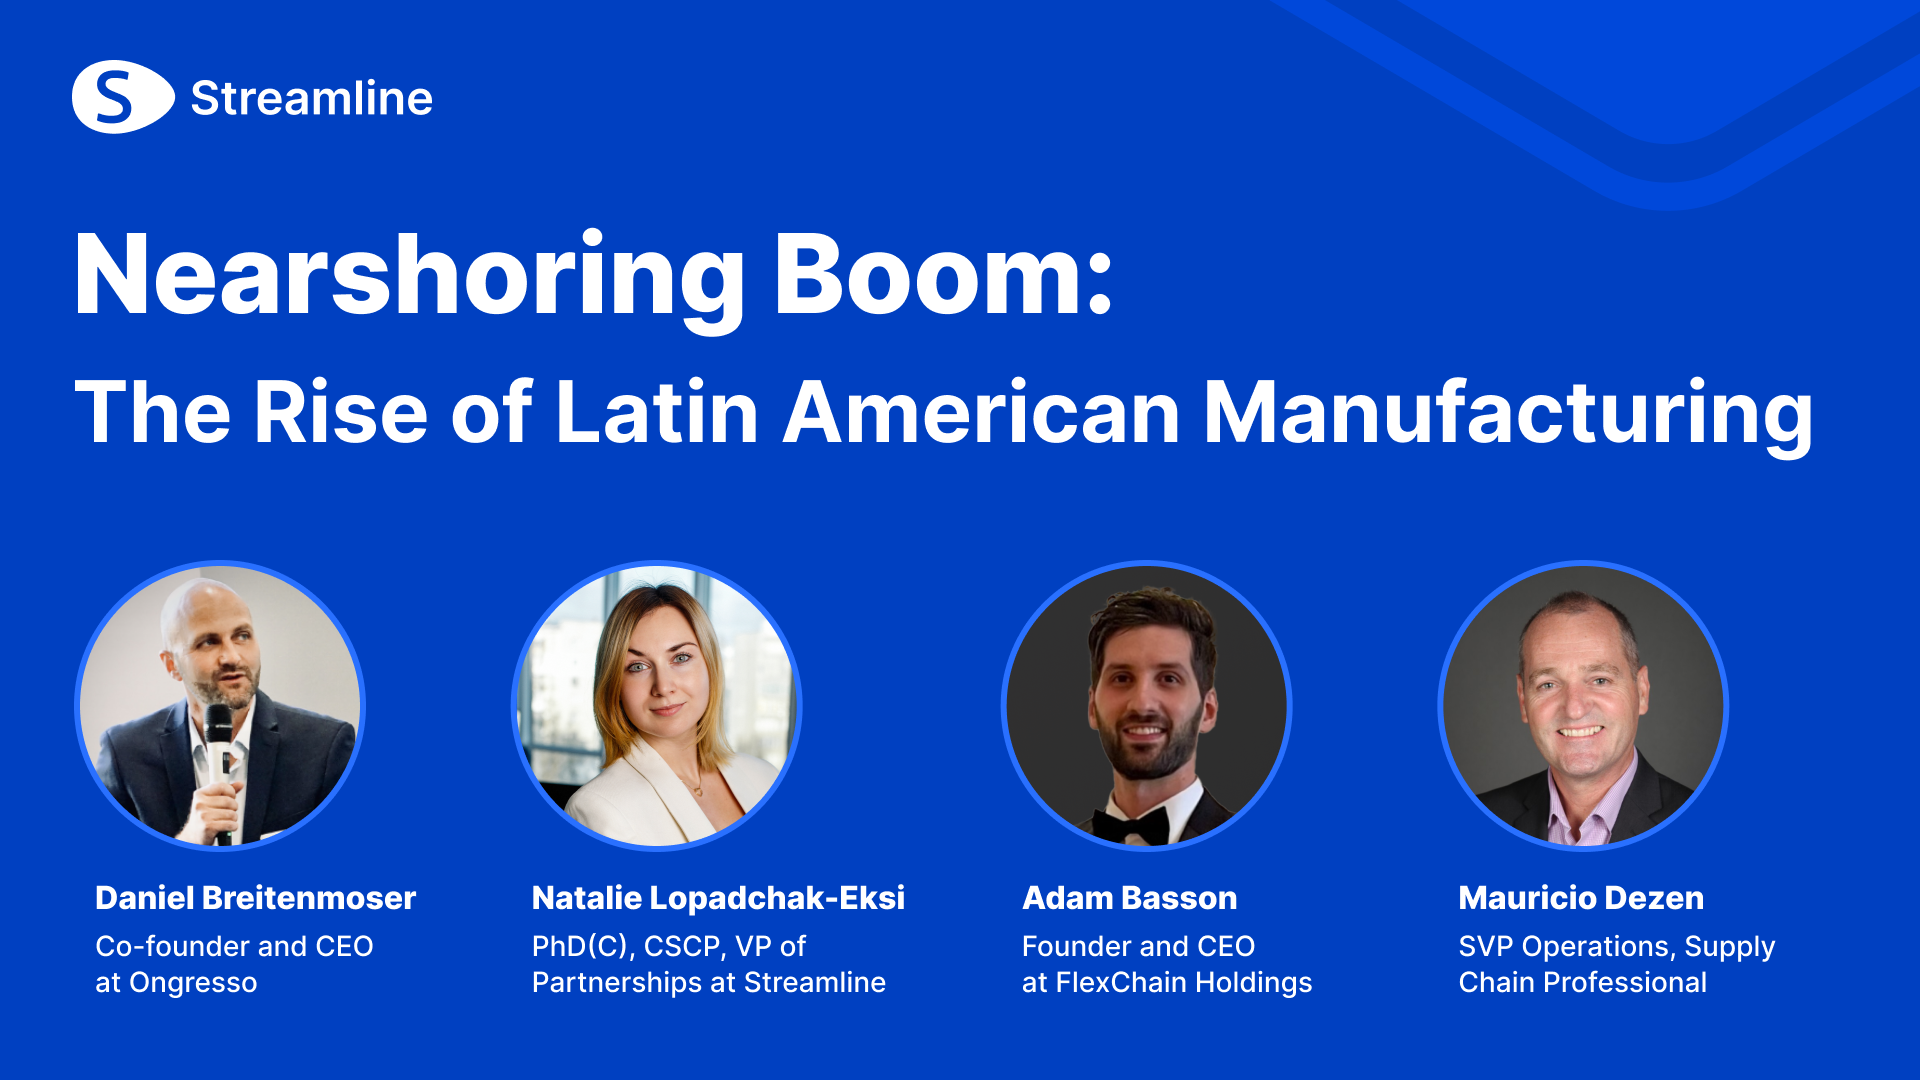 Auge del nearshoring: el auge del sector manufacturero en América Latina